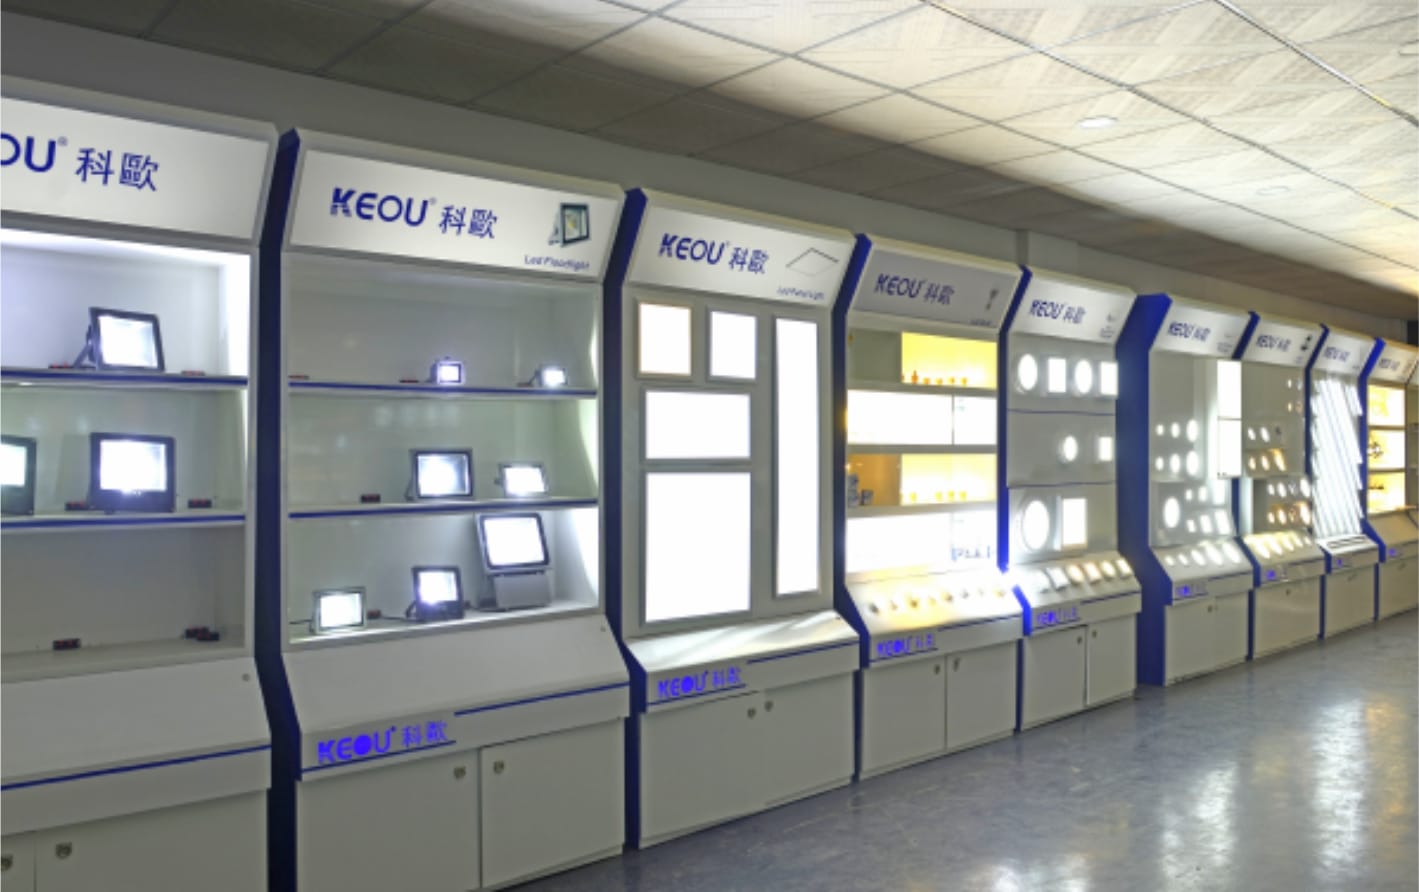 KEOU LED Light Factory